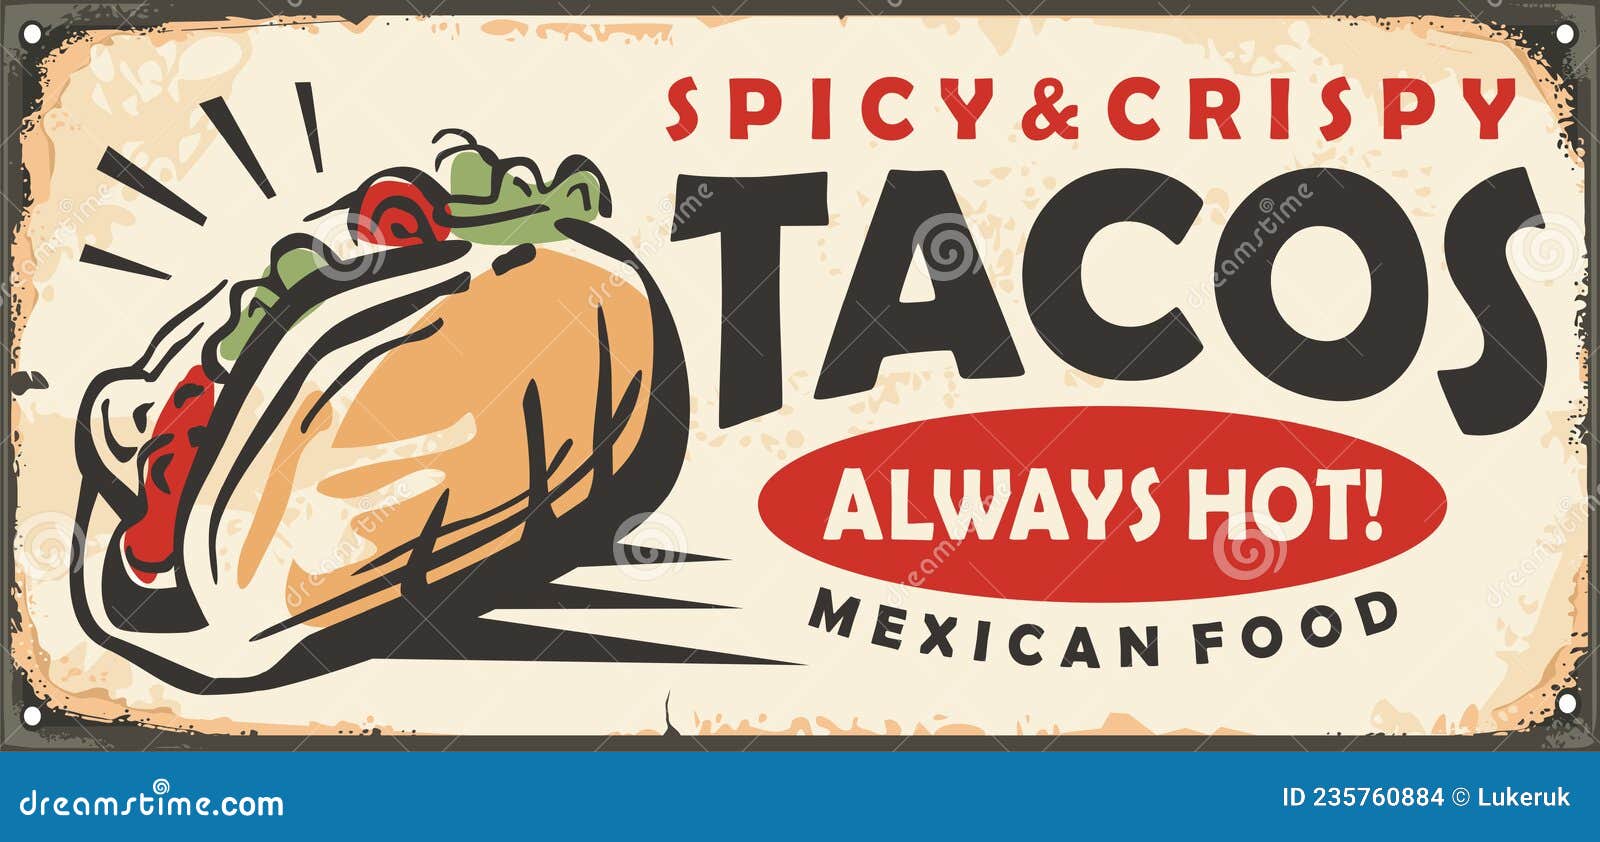 spicy and crispy tacos retro tin sign